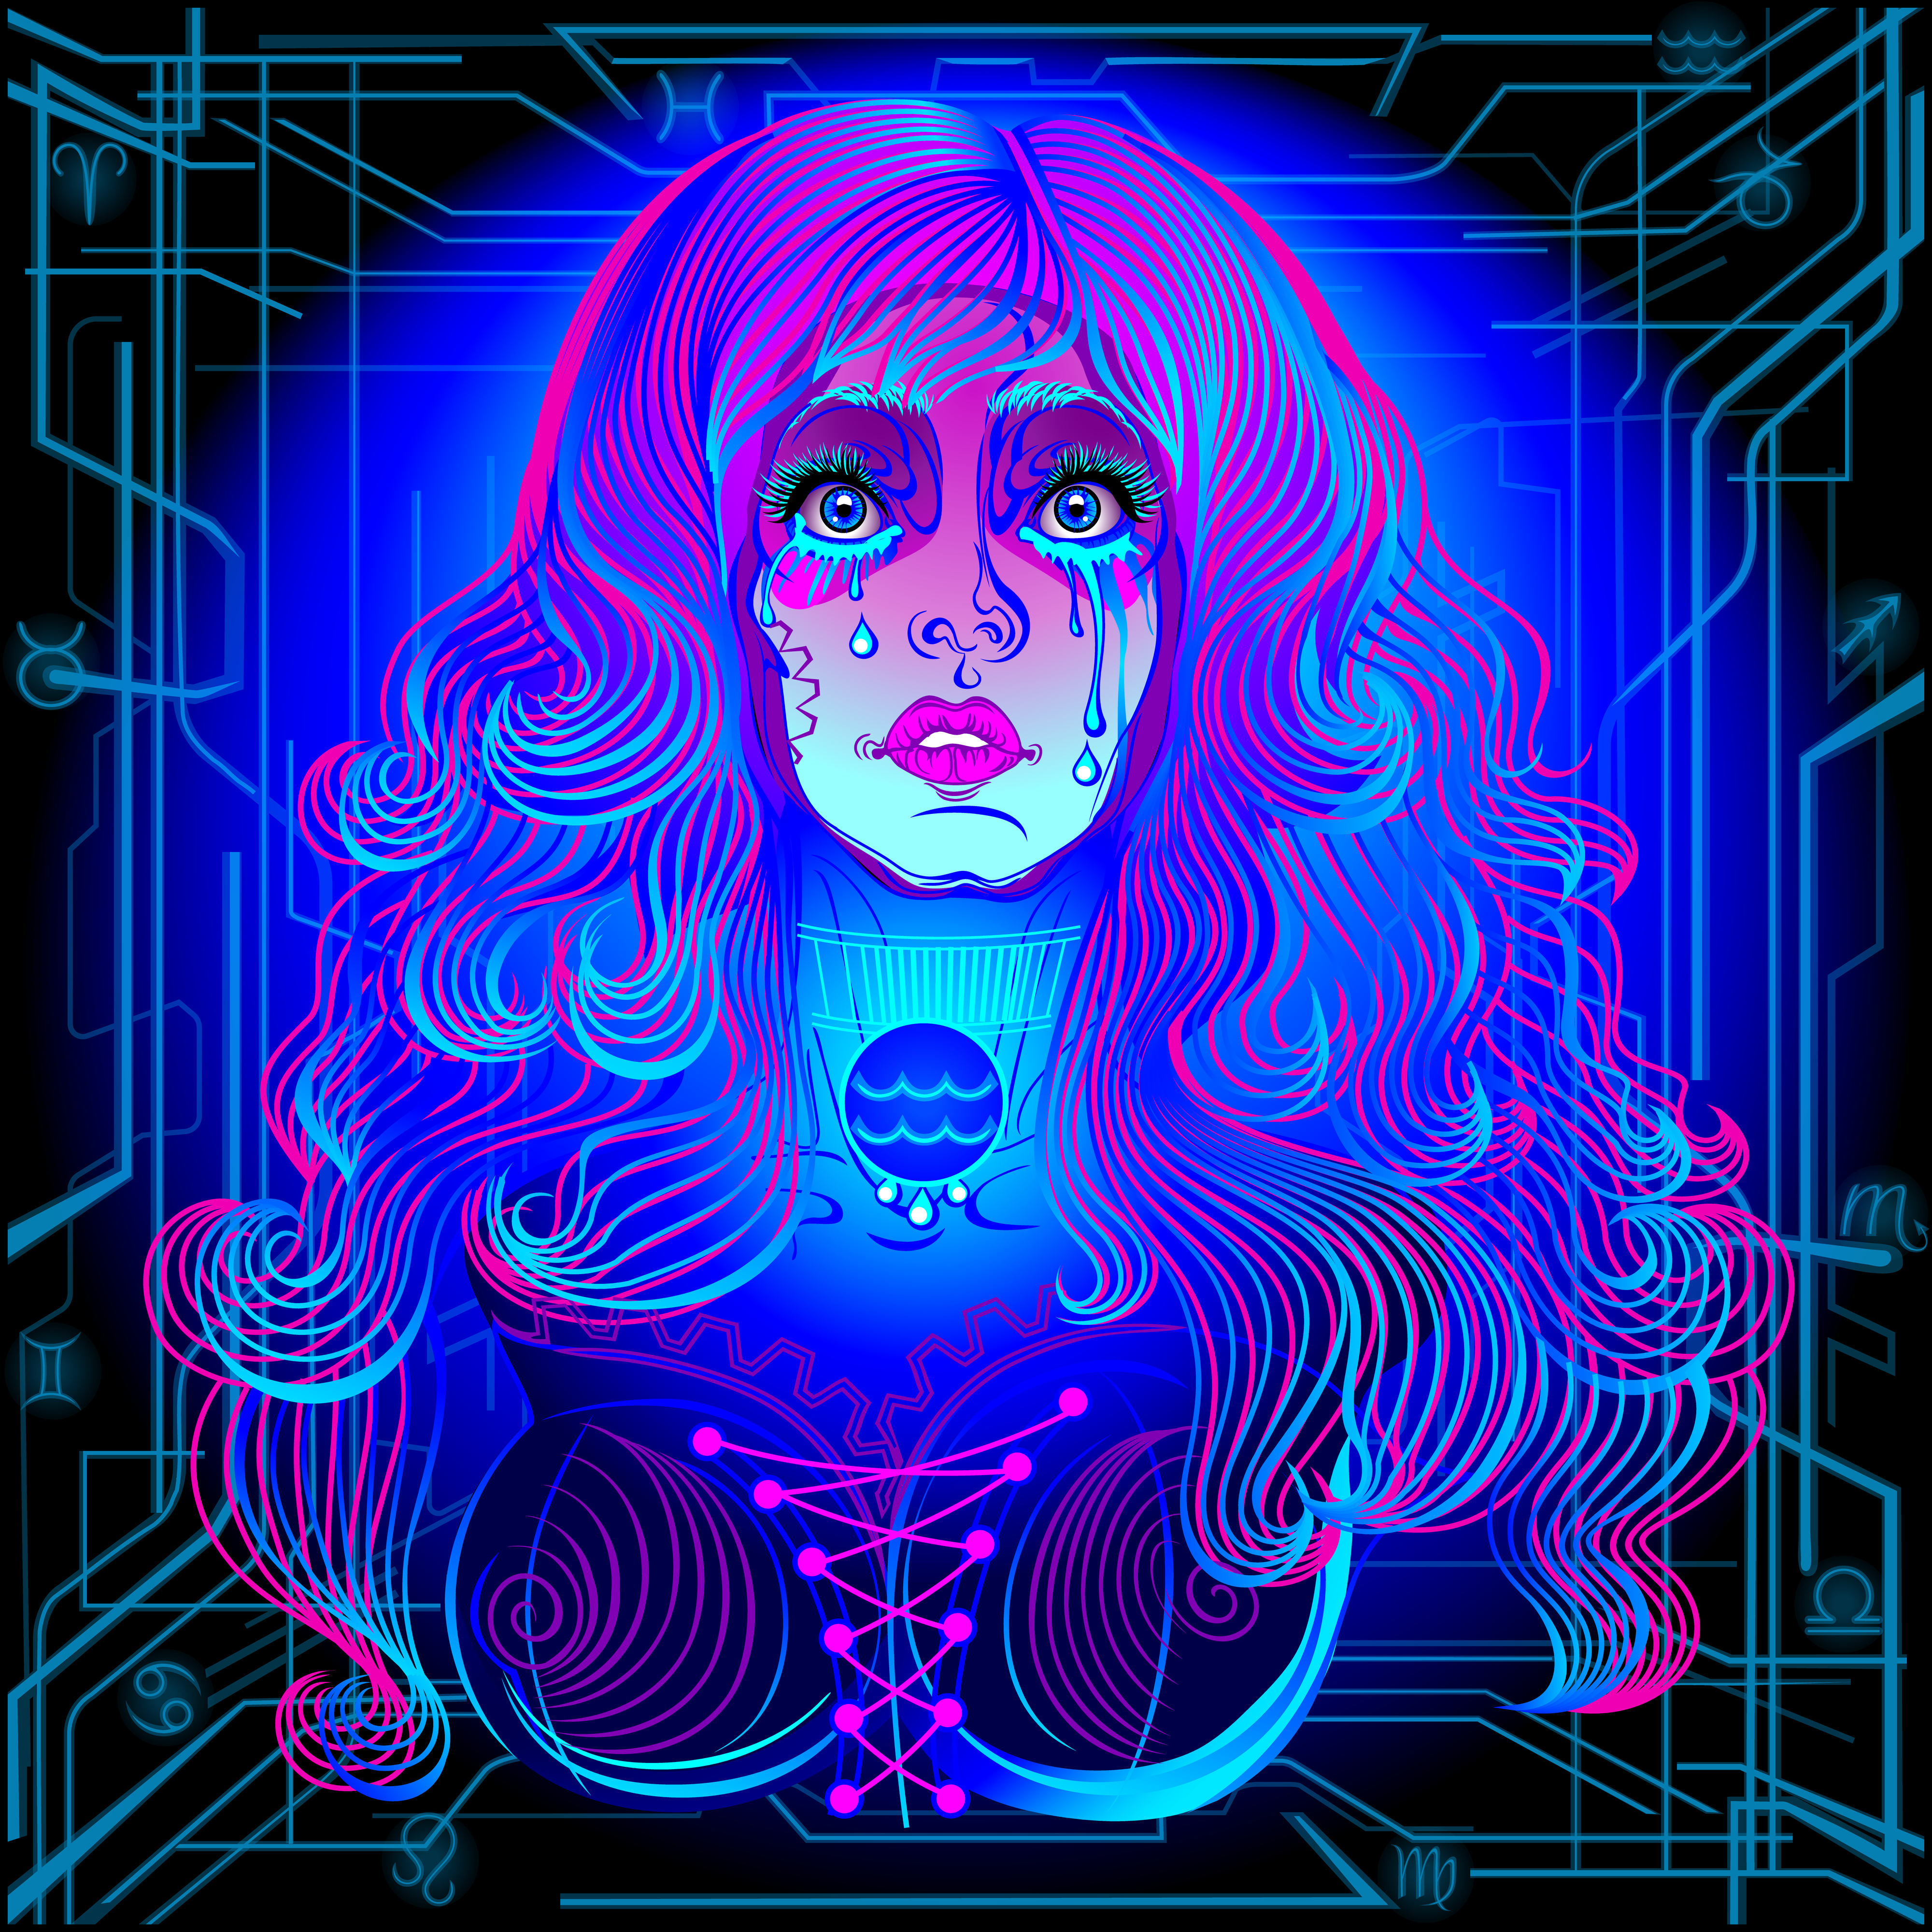 Neon artwork of an Aquarius woman | Source: Shutterstock